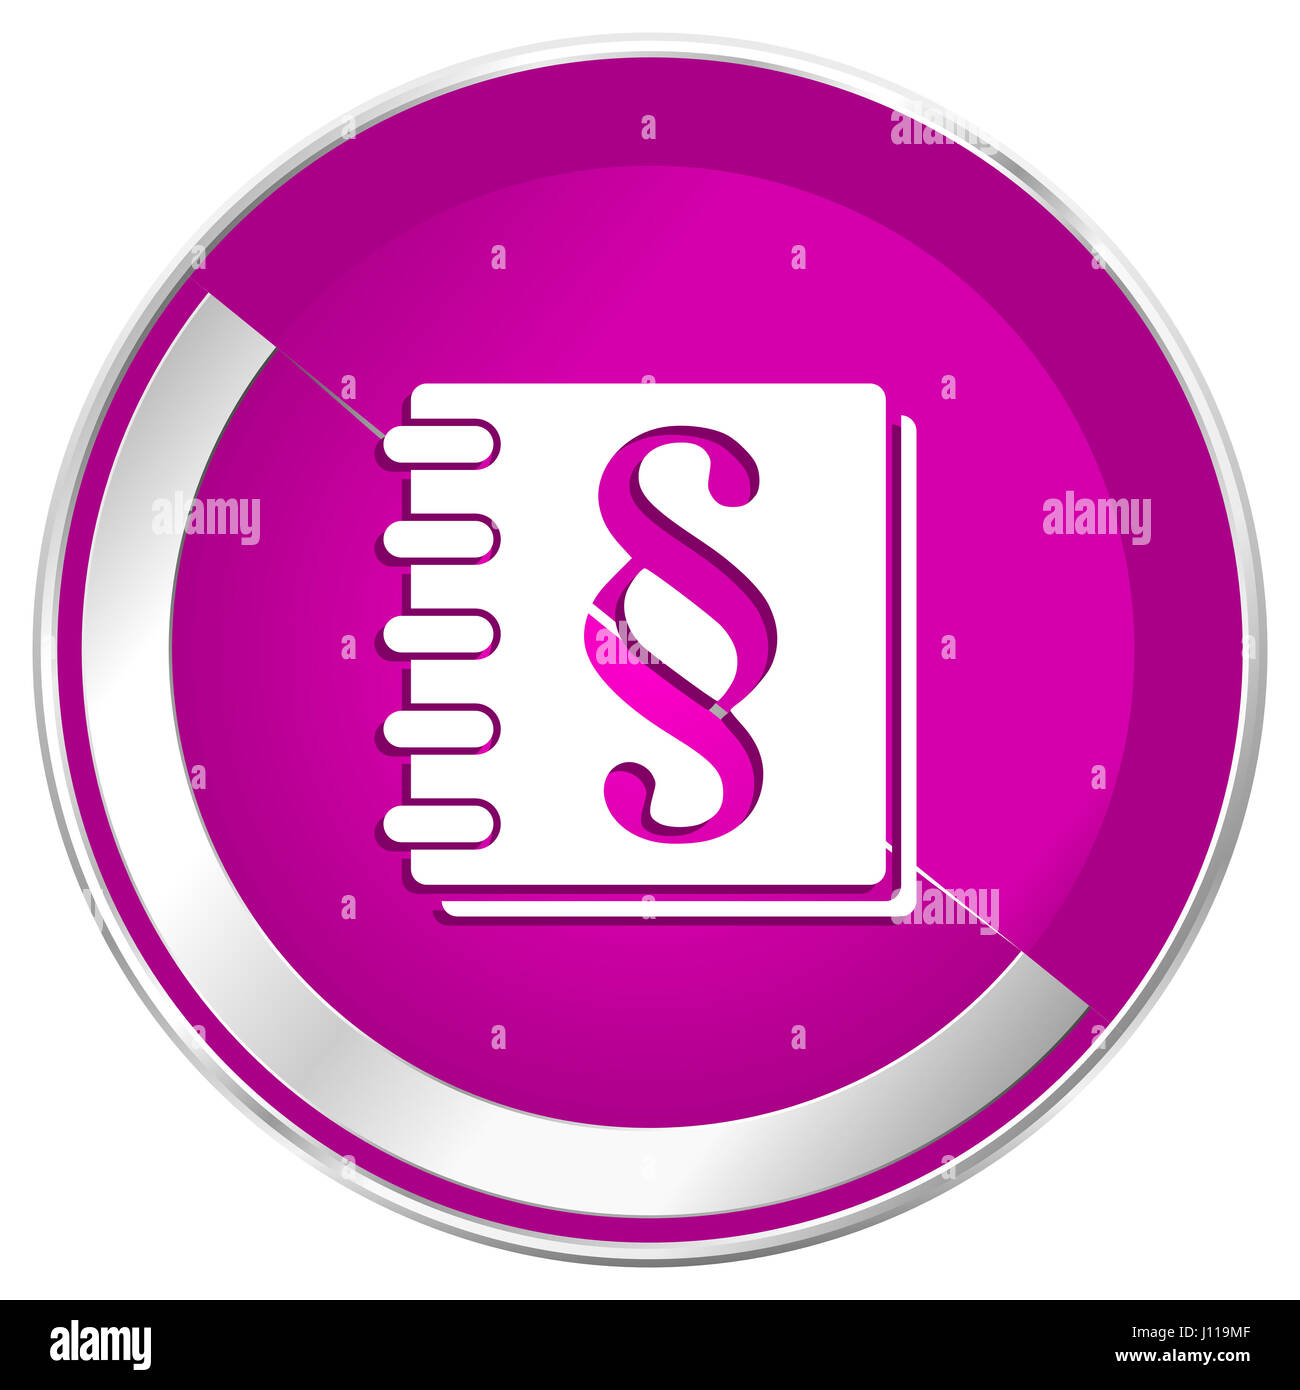 Law web design violet silver metallic border internet icon. Stock Photo